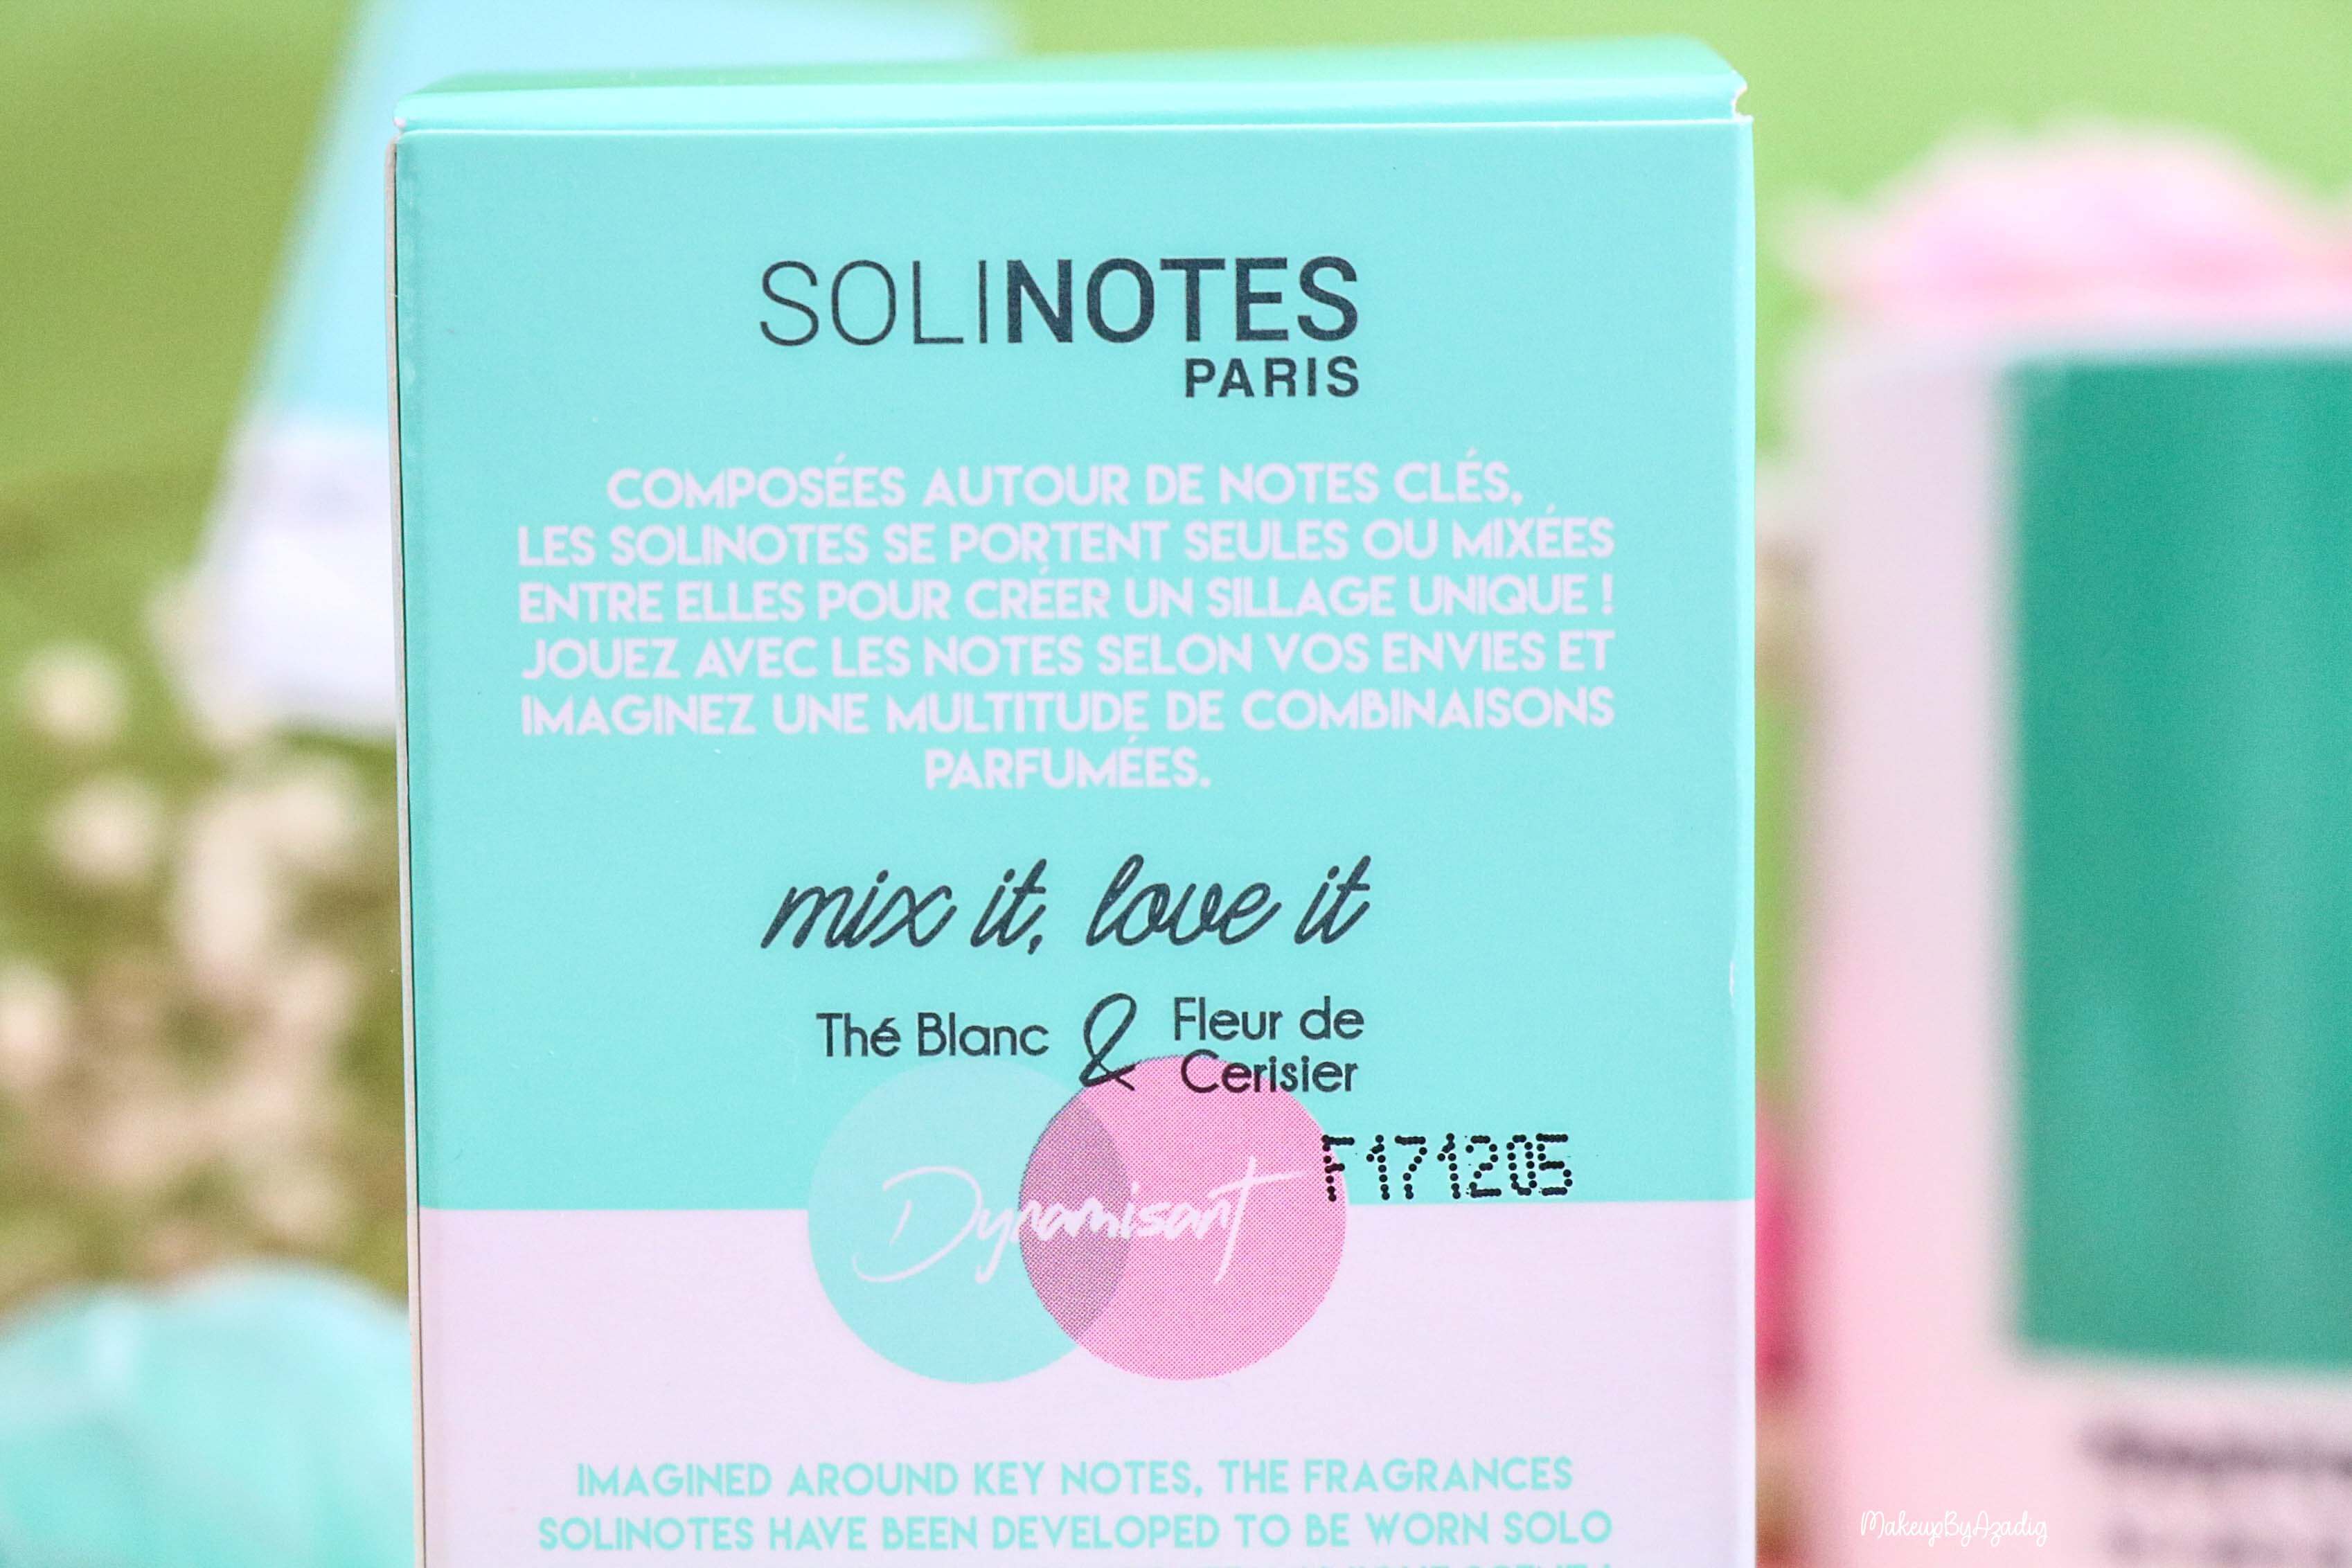 revue-parfum-solinotes-sephora-monoprix-the-blanc-vanille-oranger-prix-pas-cher-promo-makeupbyazadig-paris